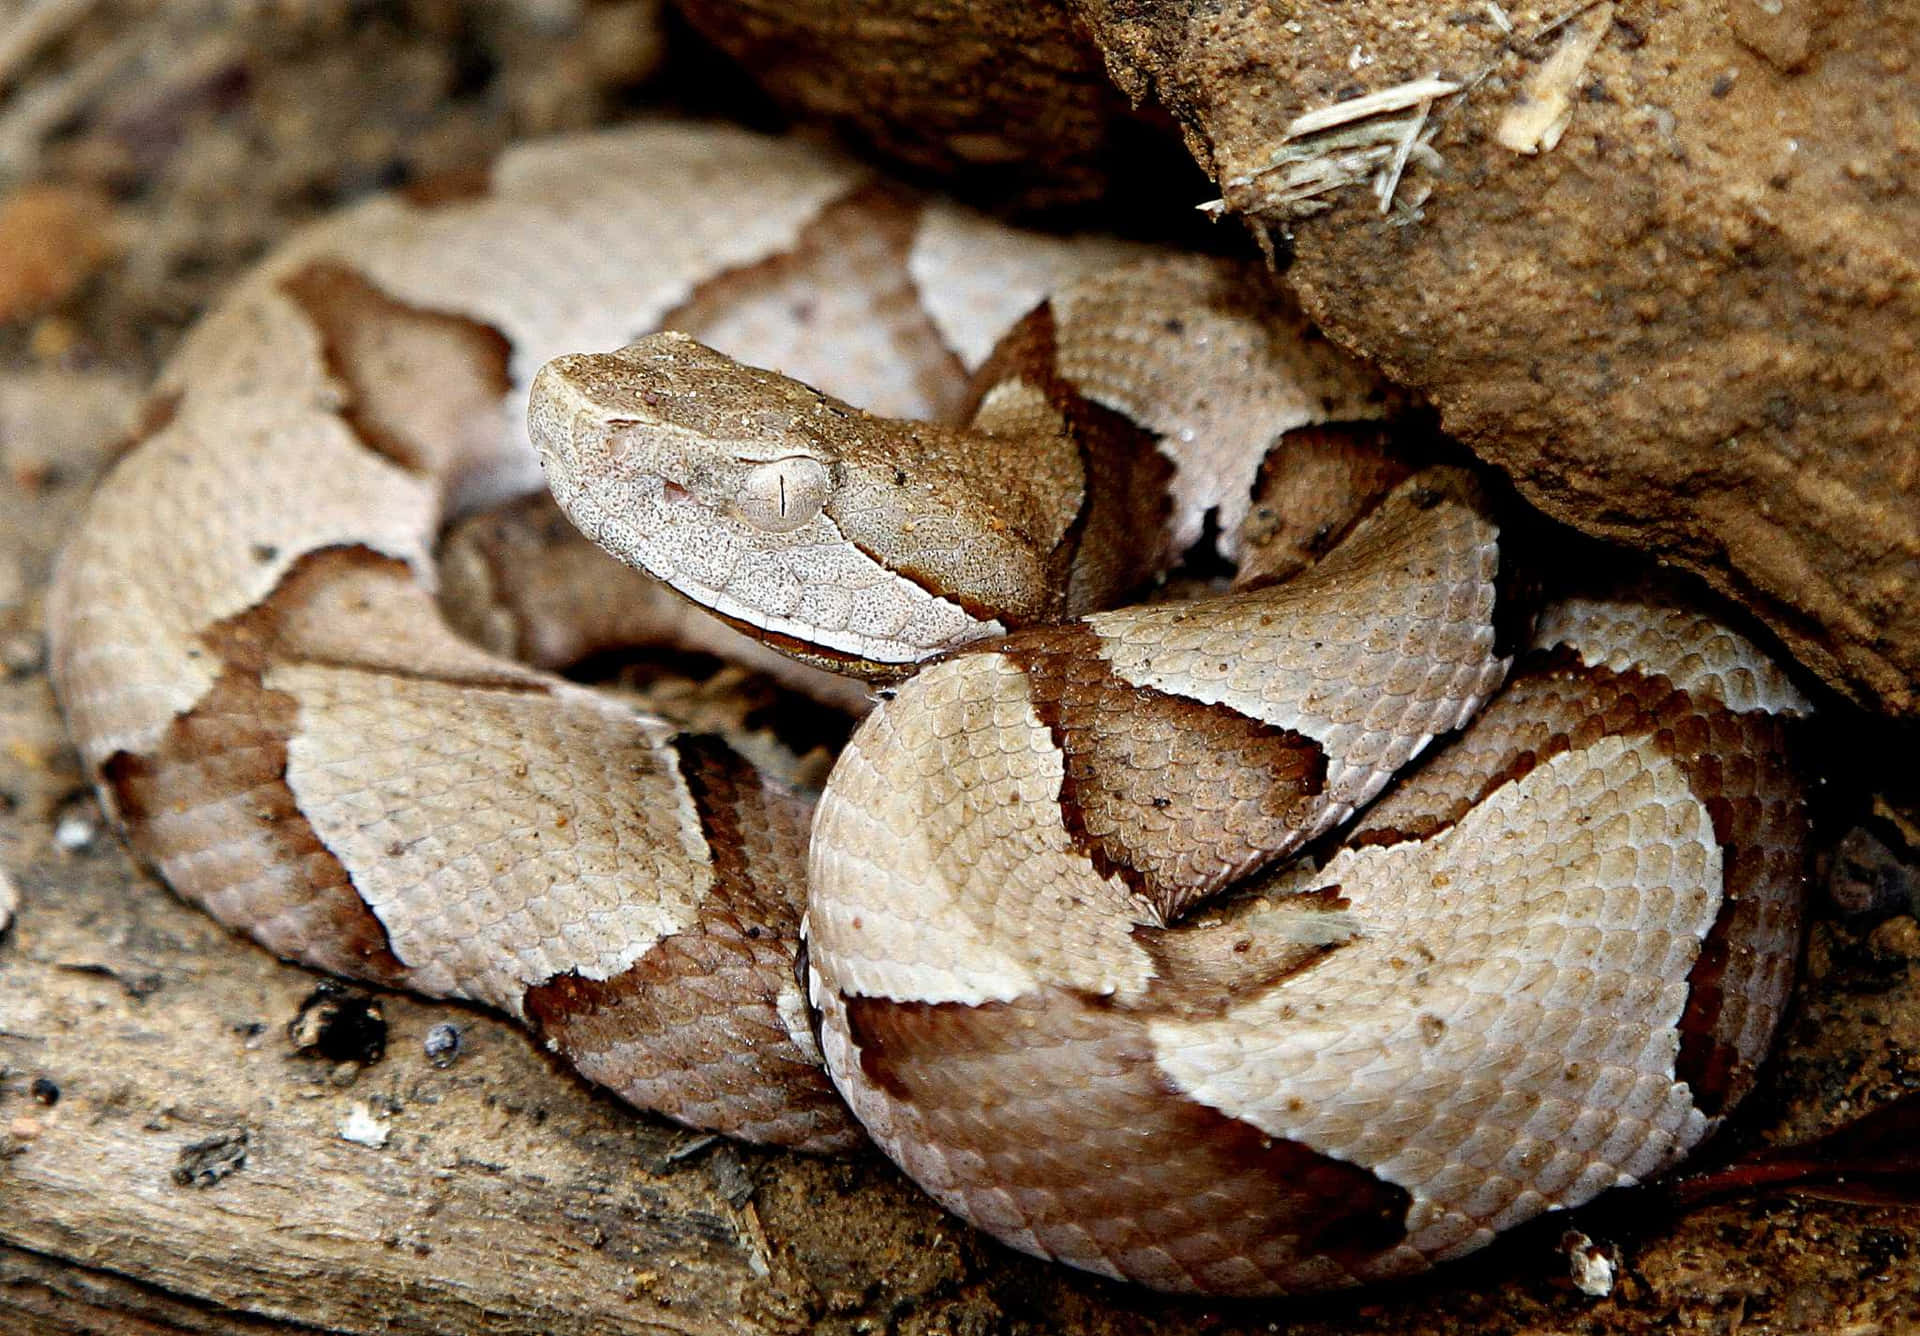 Copperhead snake sitting on forest floor.